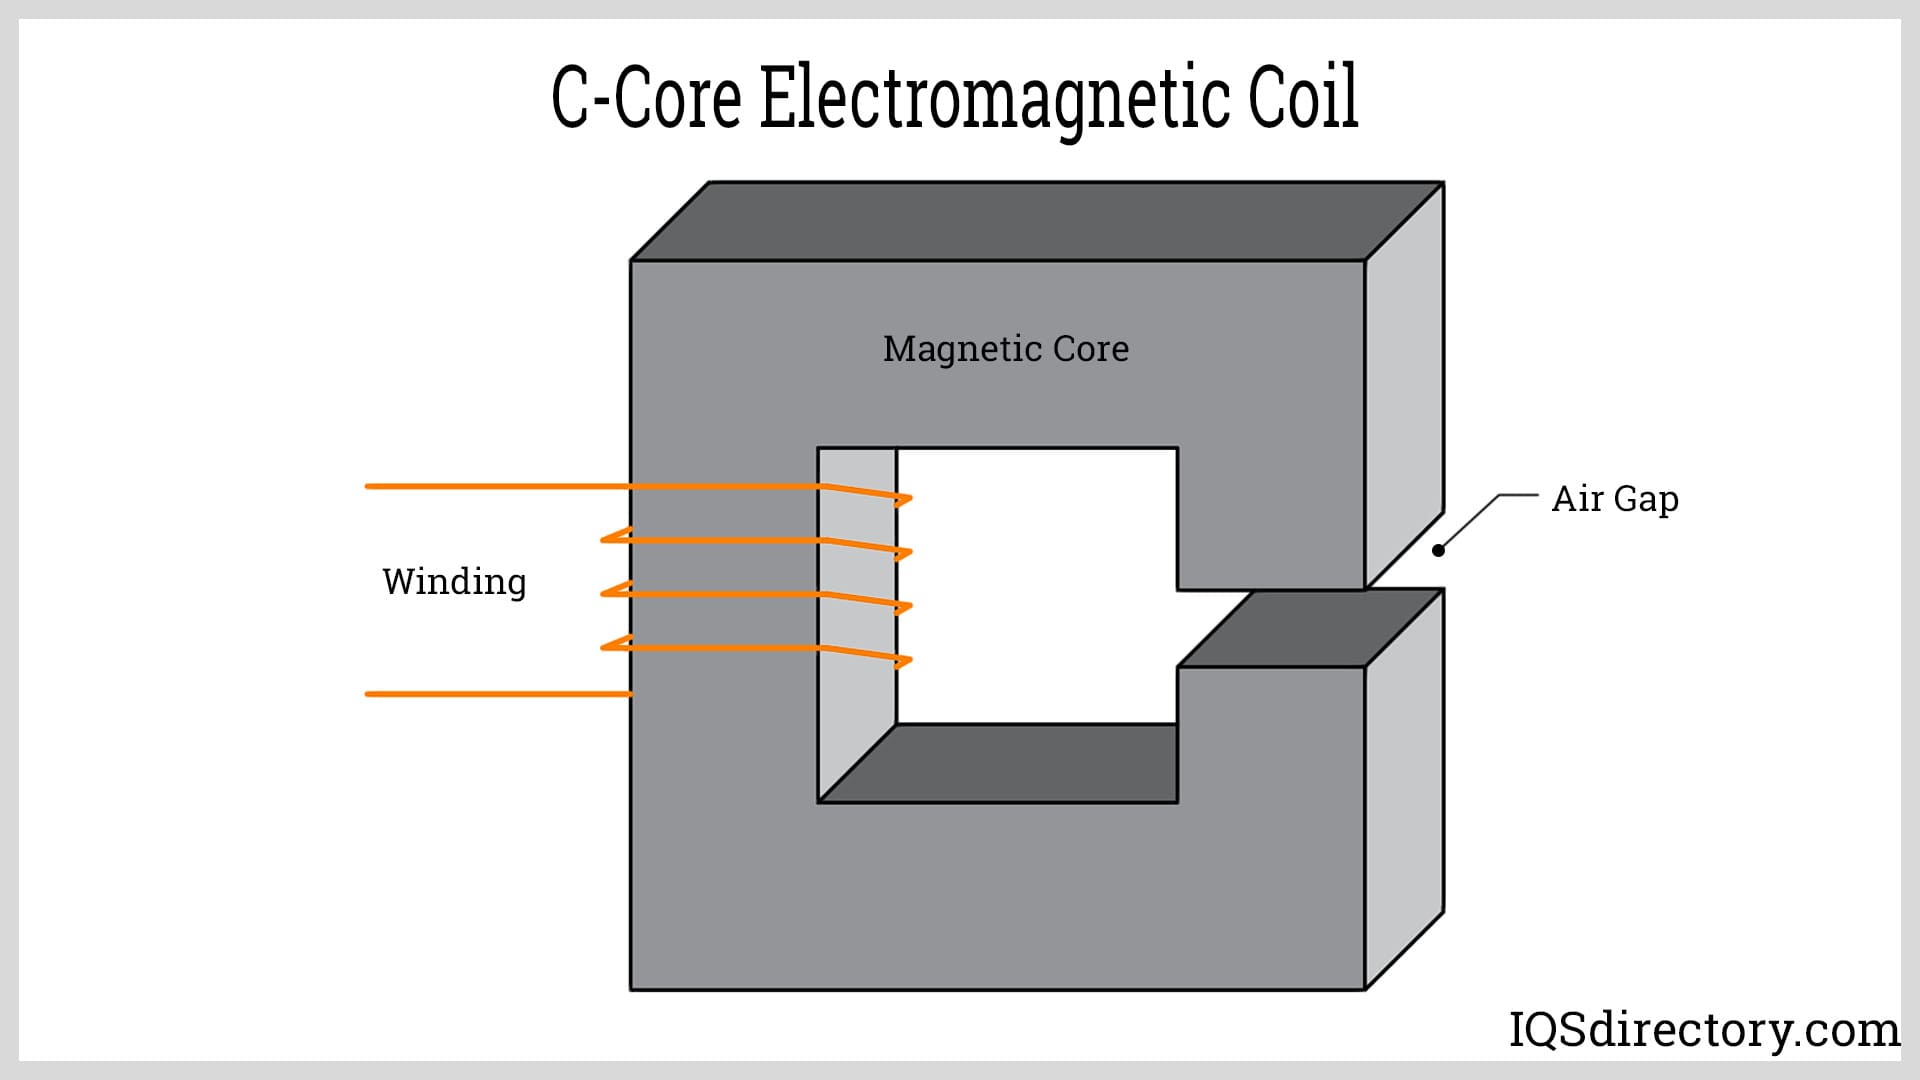 C-Core Electromagnetic Coil